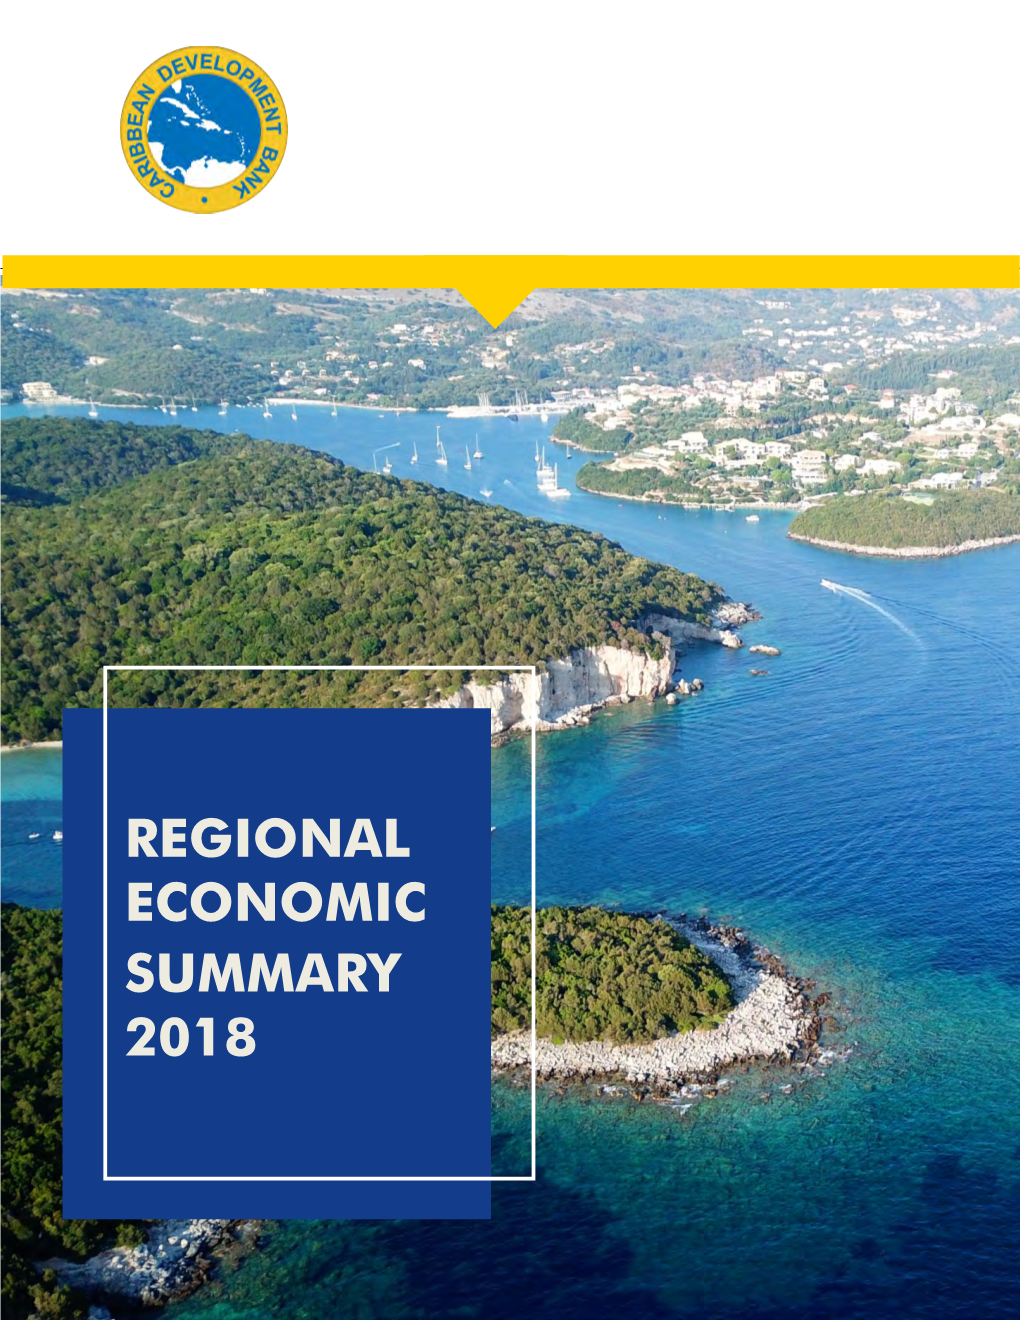 CDB Regional Economic Summary 2018